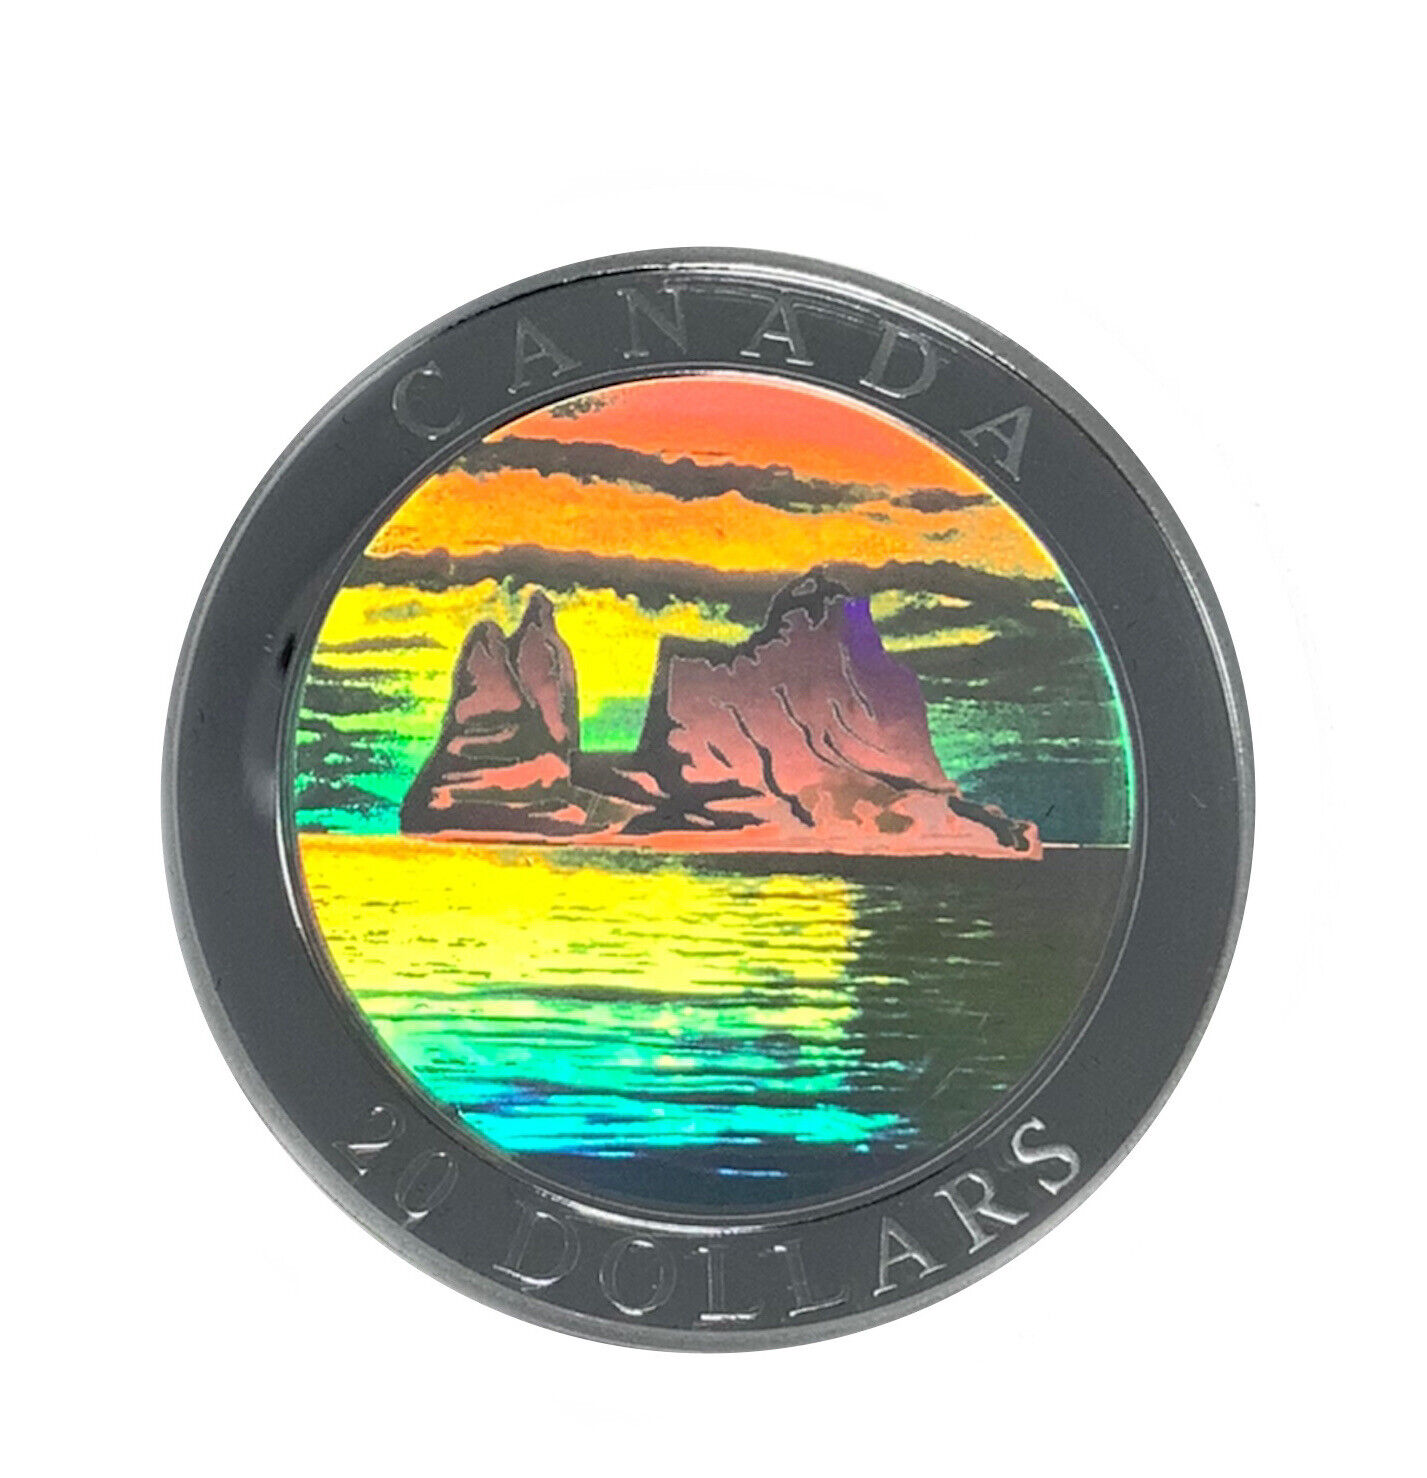 2004 🇨🇦 20$ 1oz Fine Silver coin: THE ICEBERG Hologramm Coin (bt)